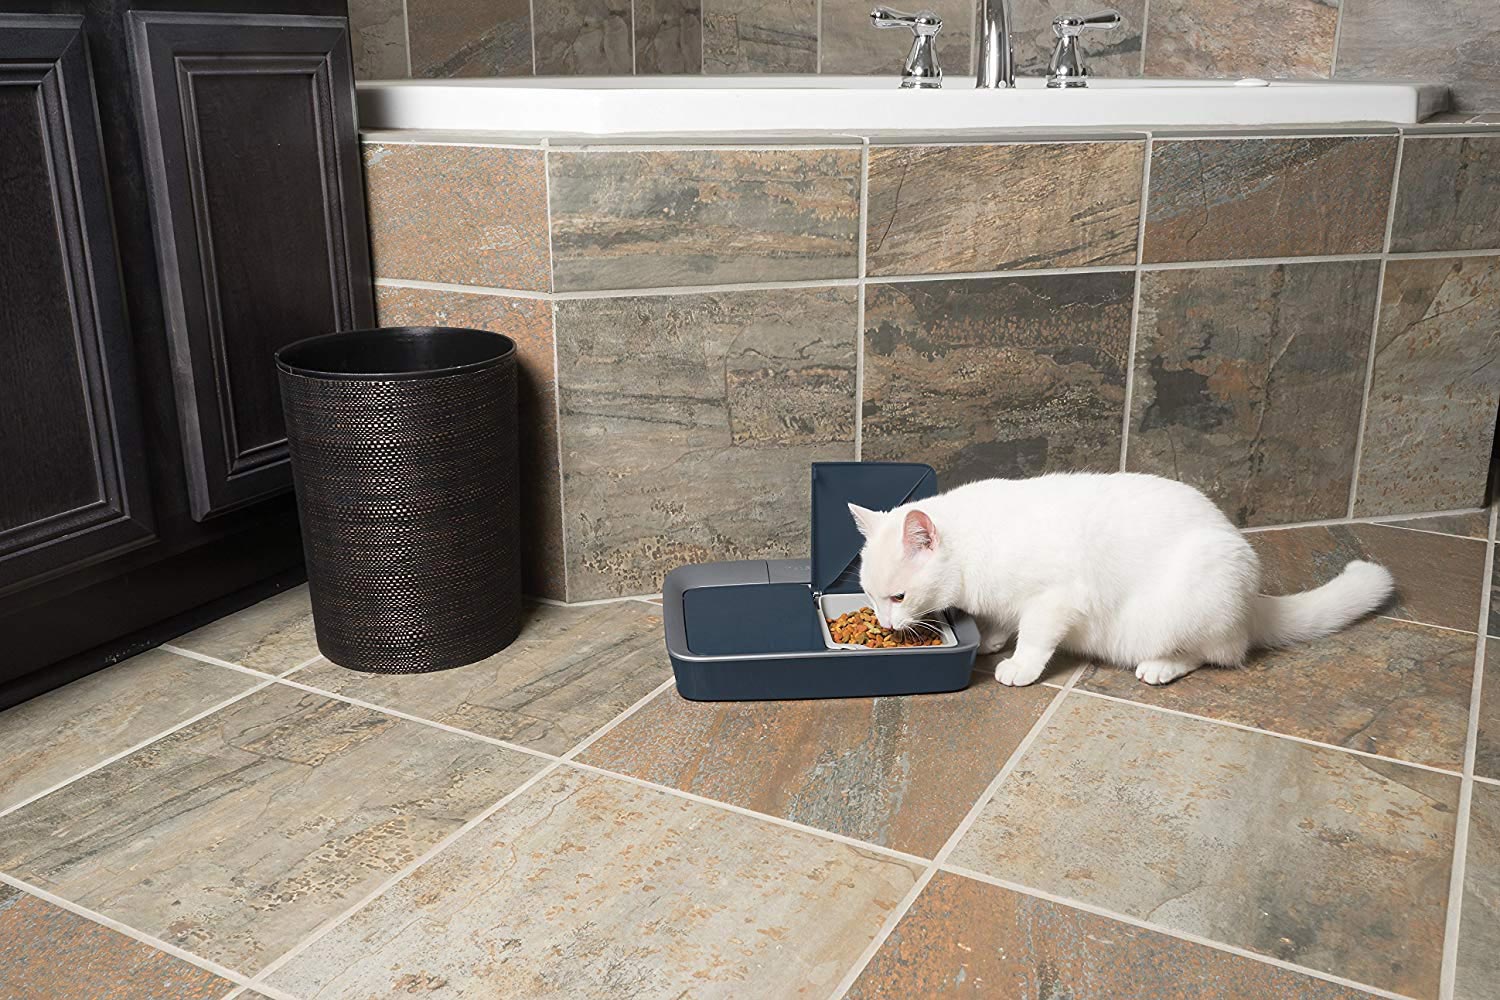 PetSafe dry food cat/dog feeder